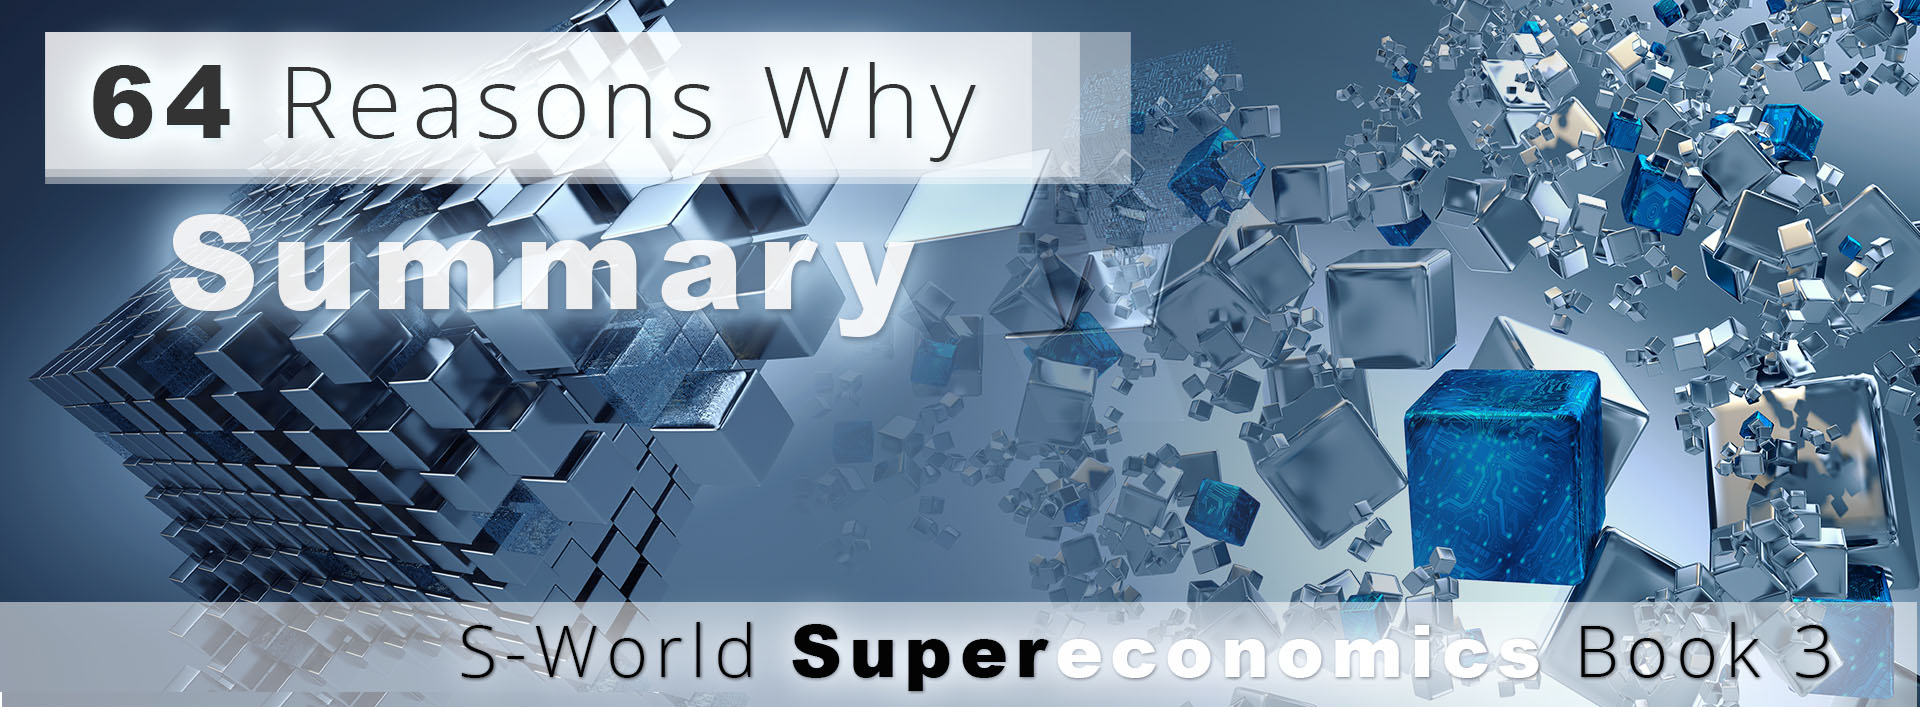 64-Reasons-Why__Summary__Supereconomics-Book-3